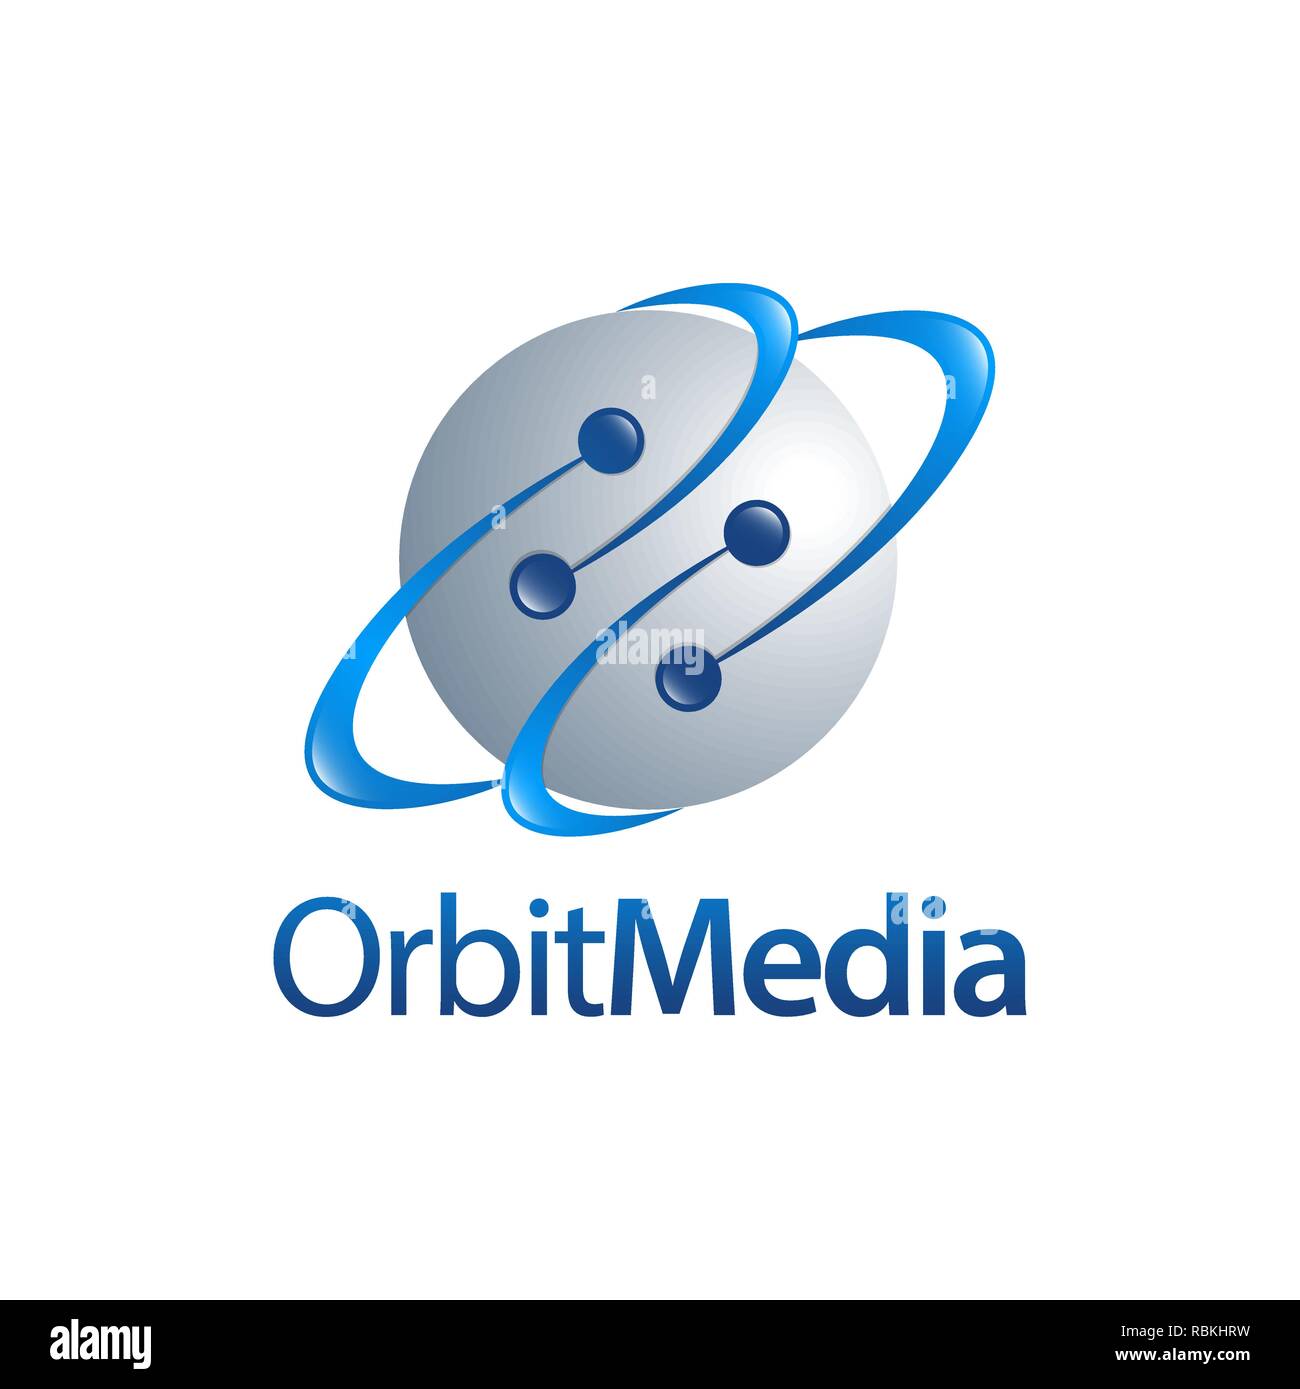 Orbit Media. Sphere planet orbit logo concept design template idea Stock Vector